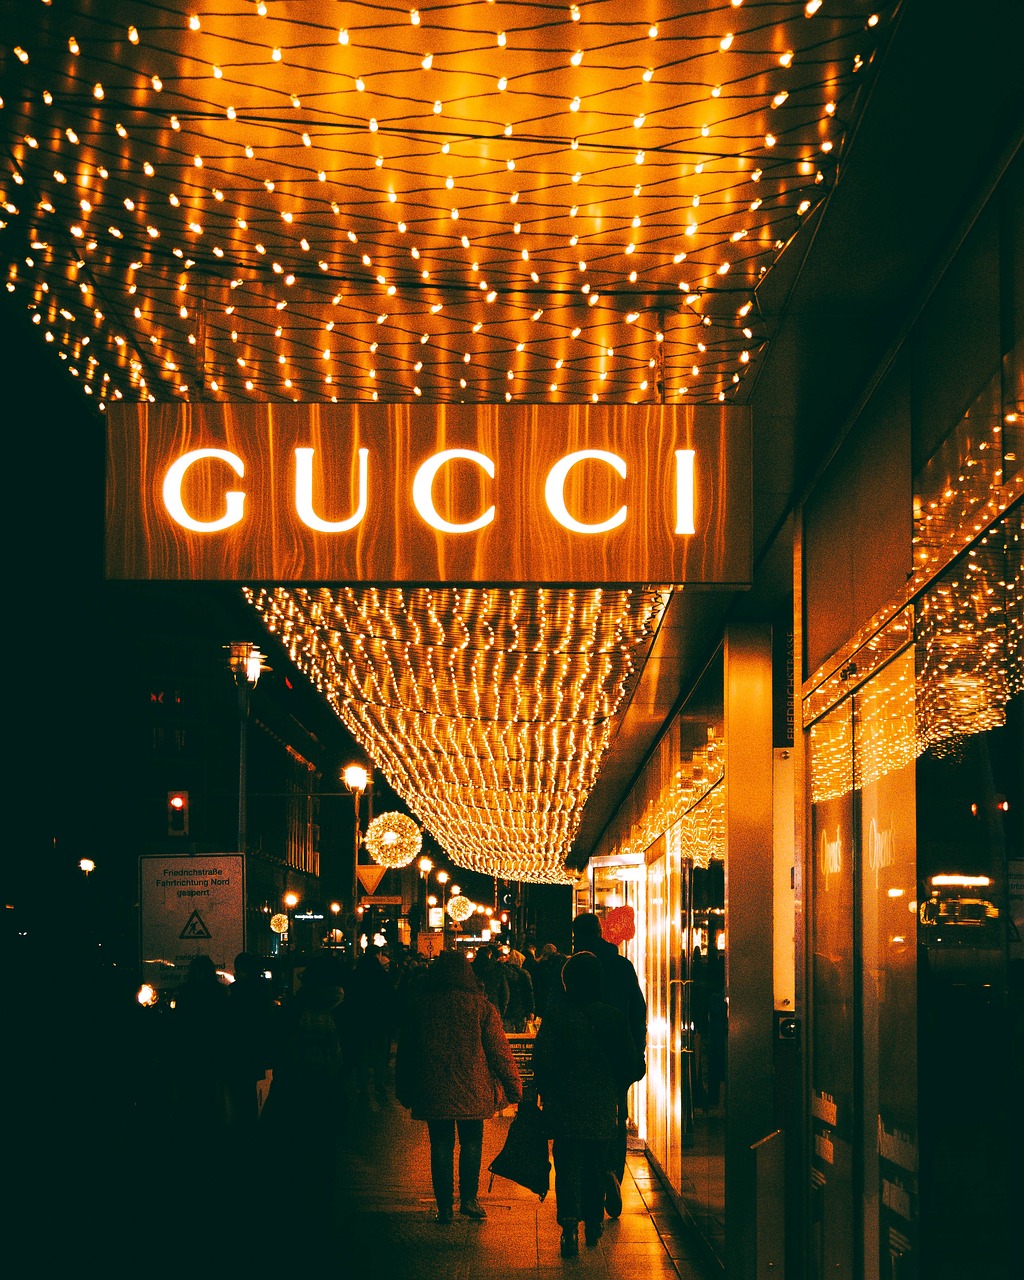 Familia Gucci: Disputas por una herencia muy controvertida